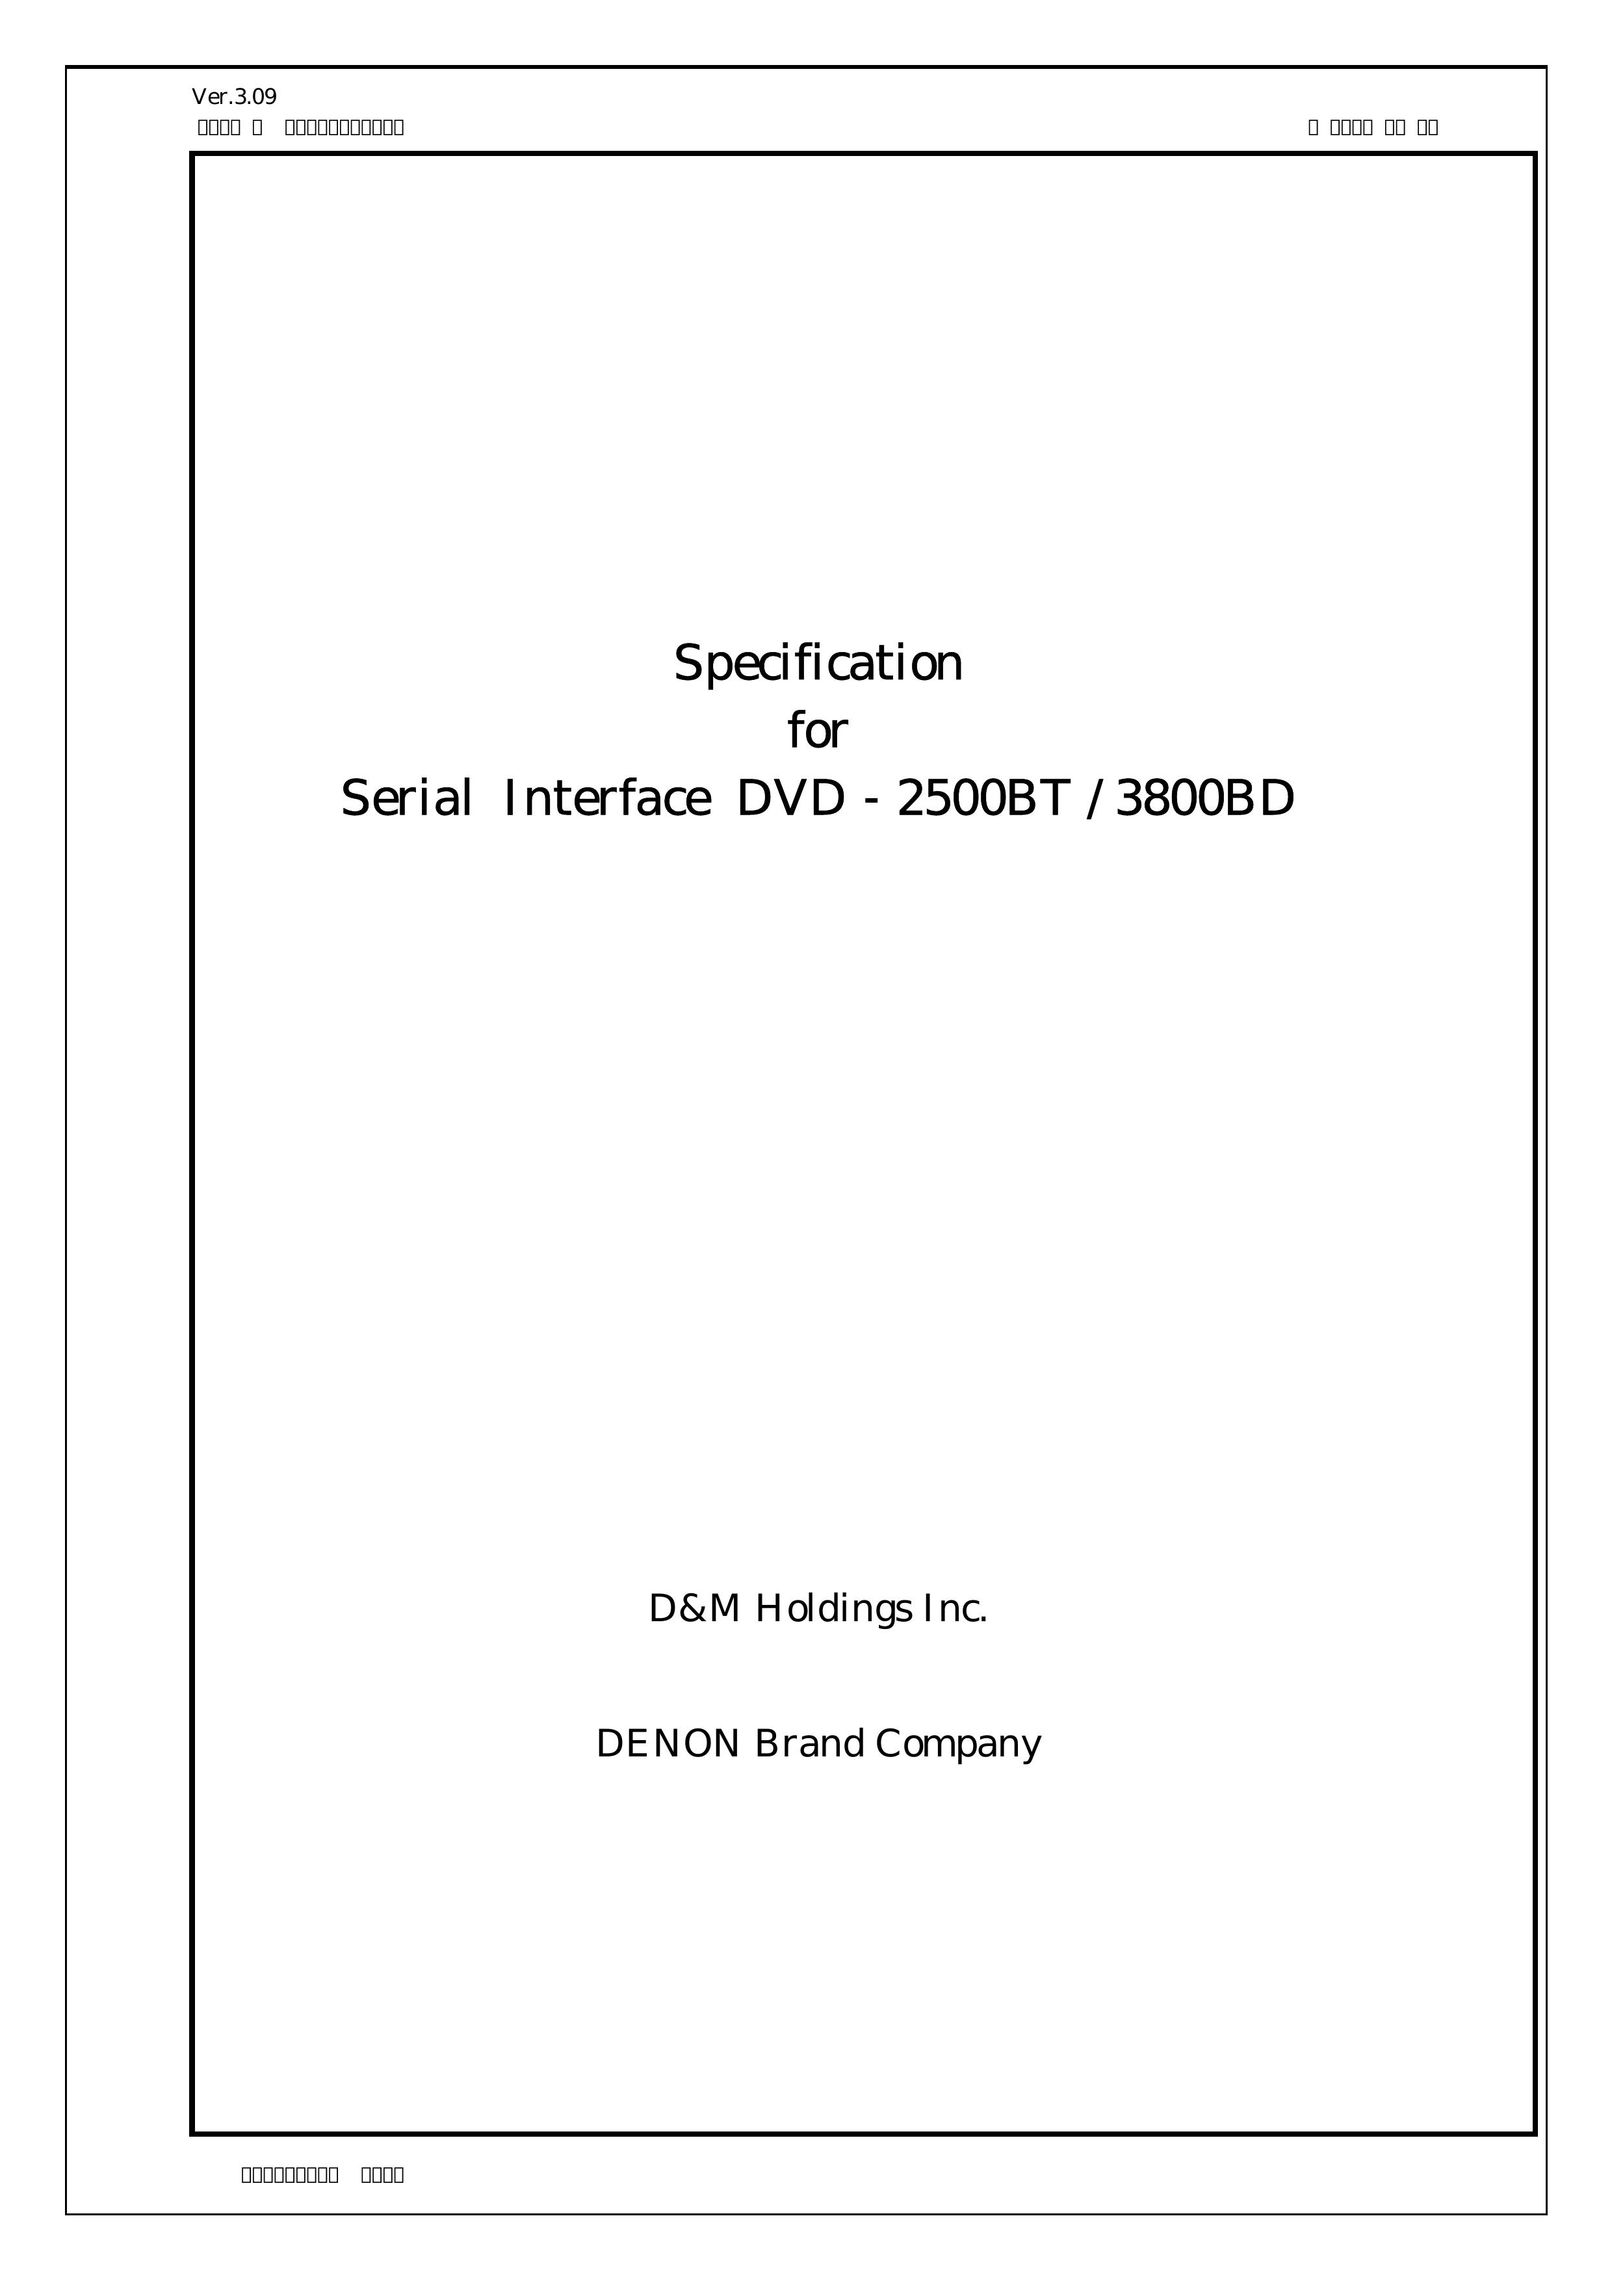 Denon 3800BD DVD Player User Manual